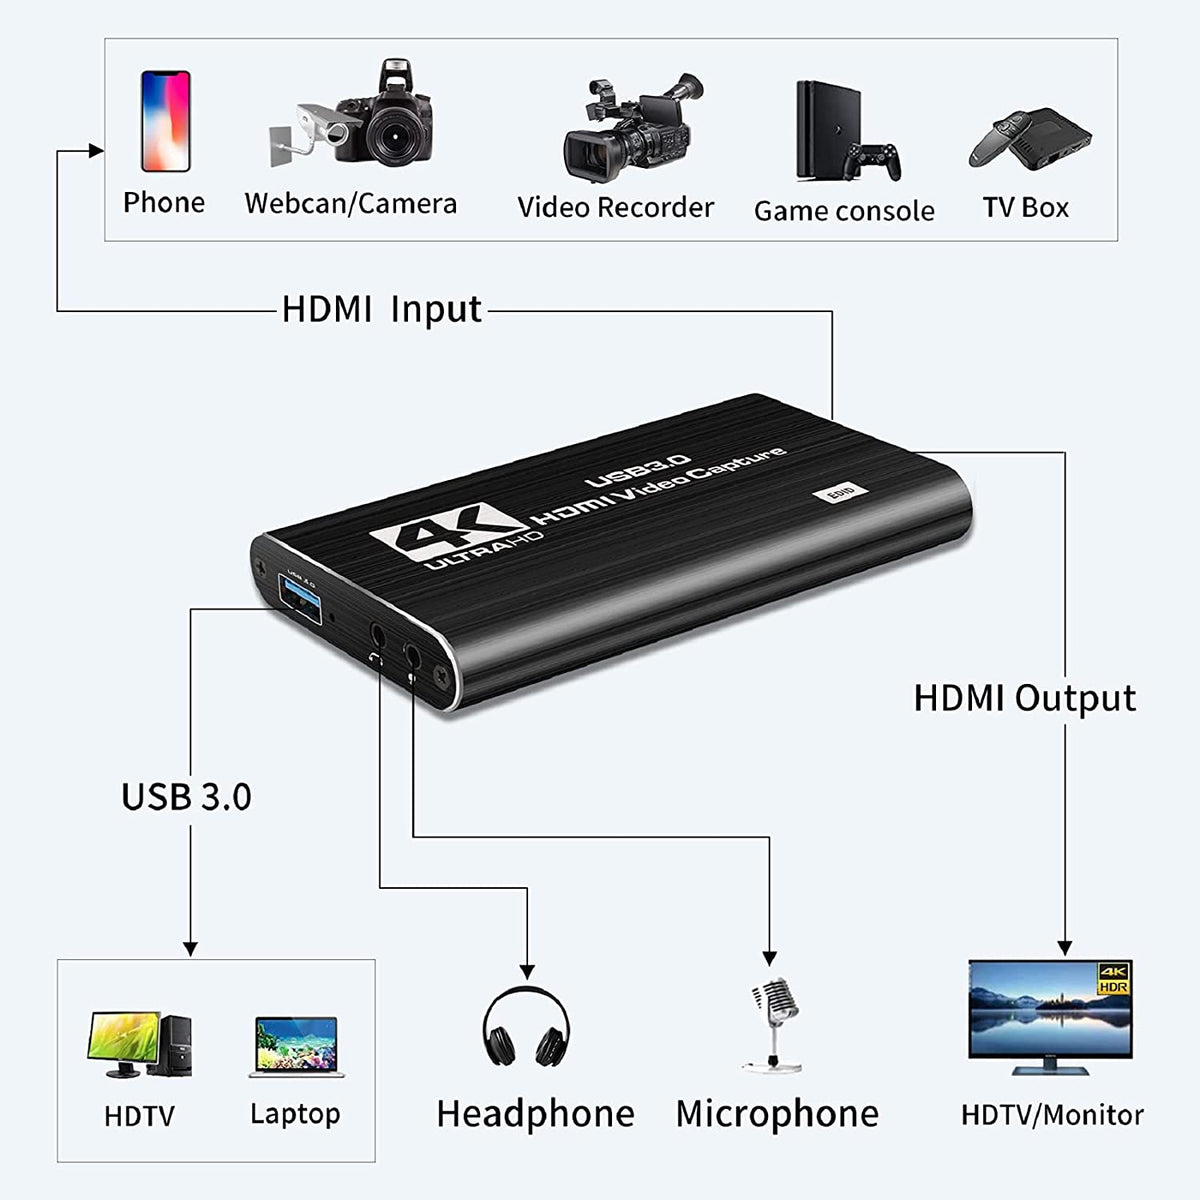 USB 3.0 / HDMI video capture card